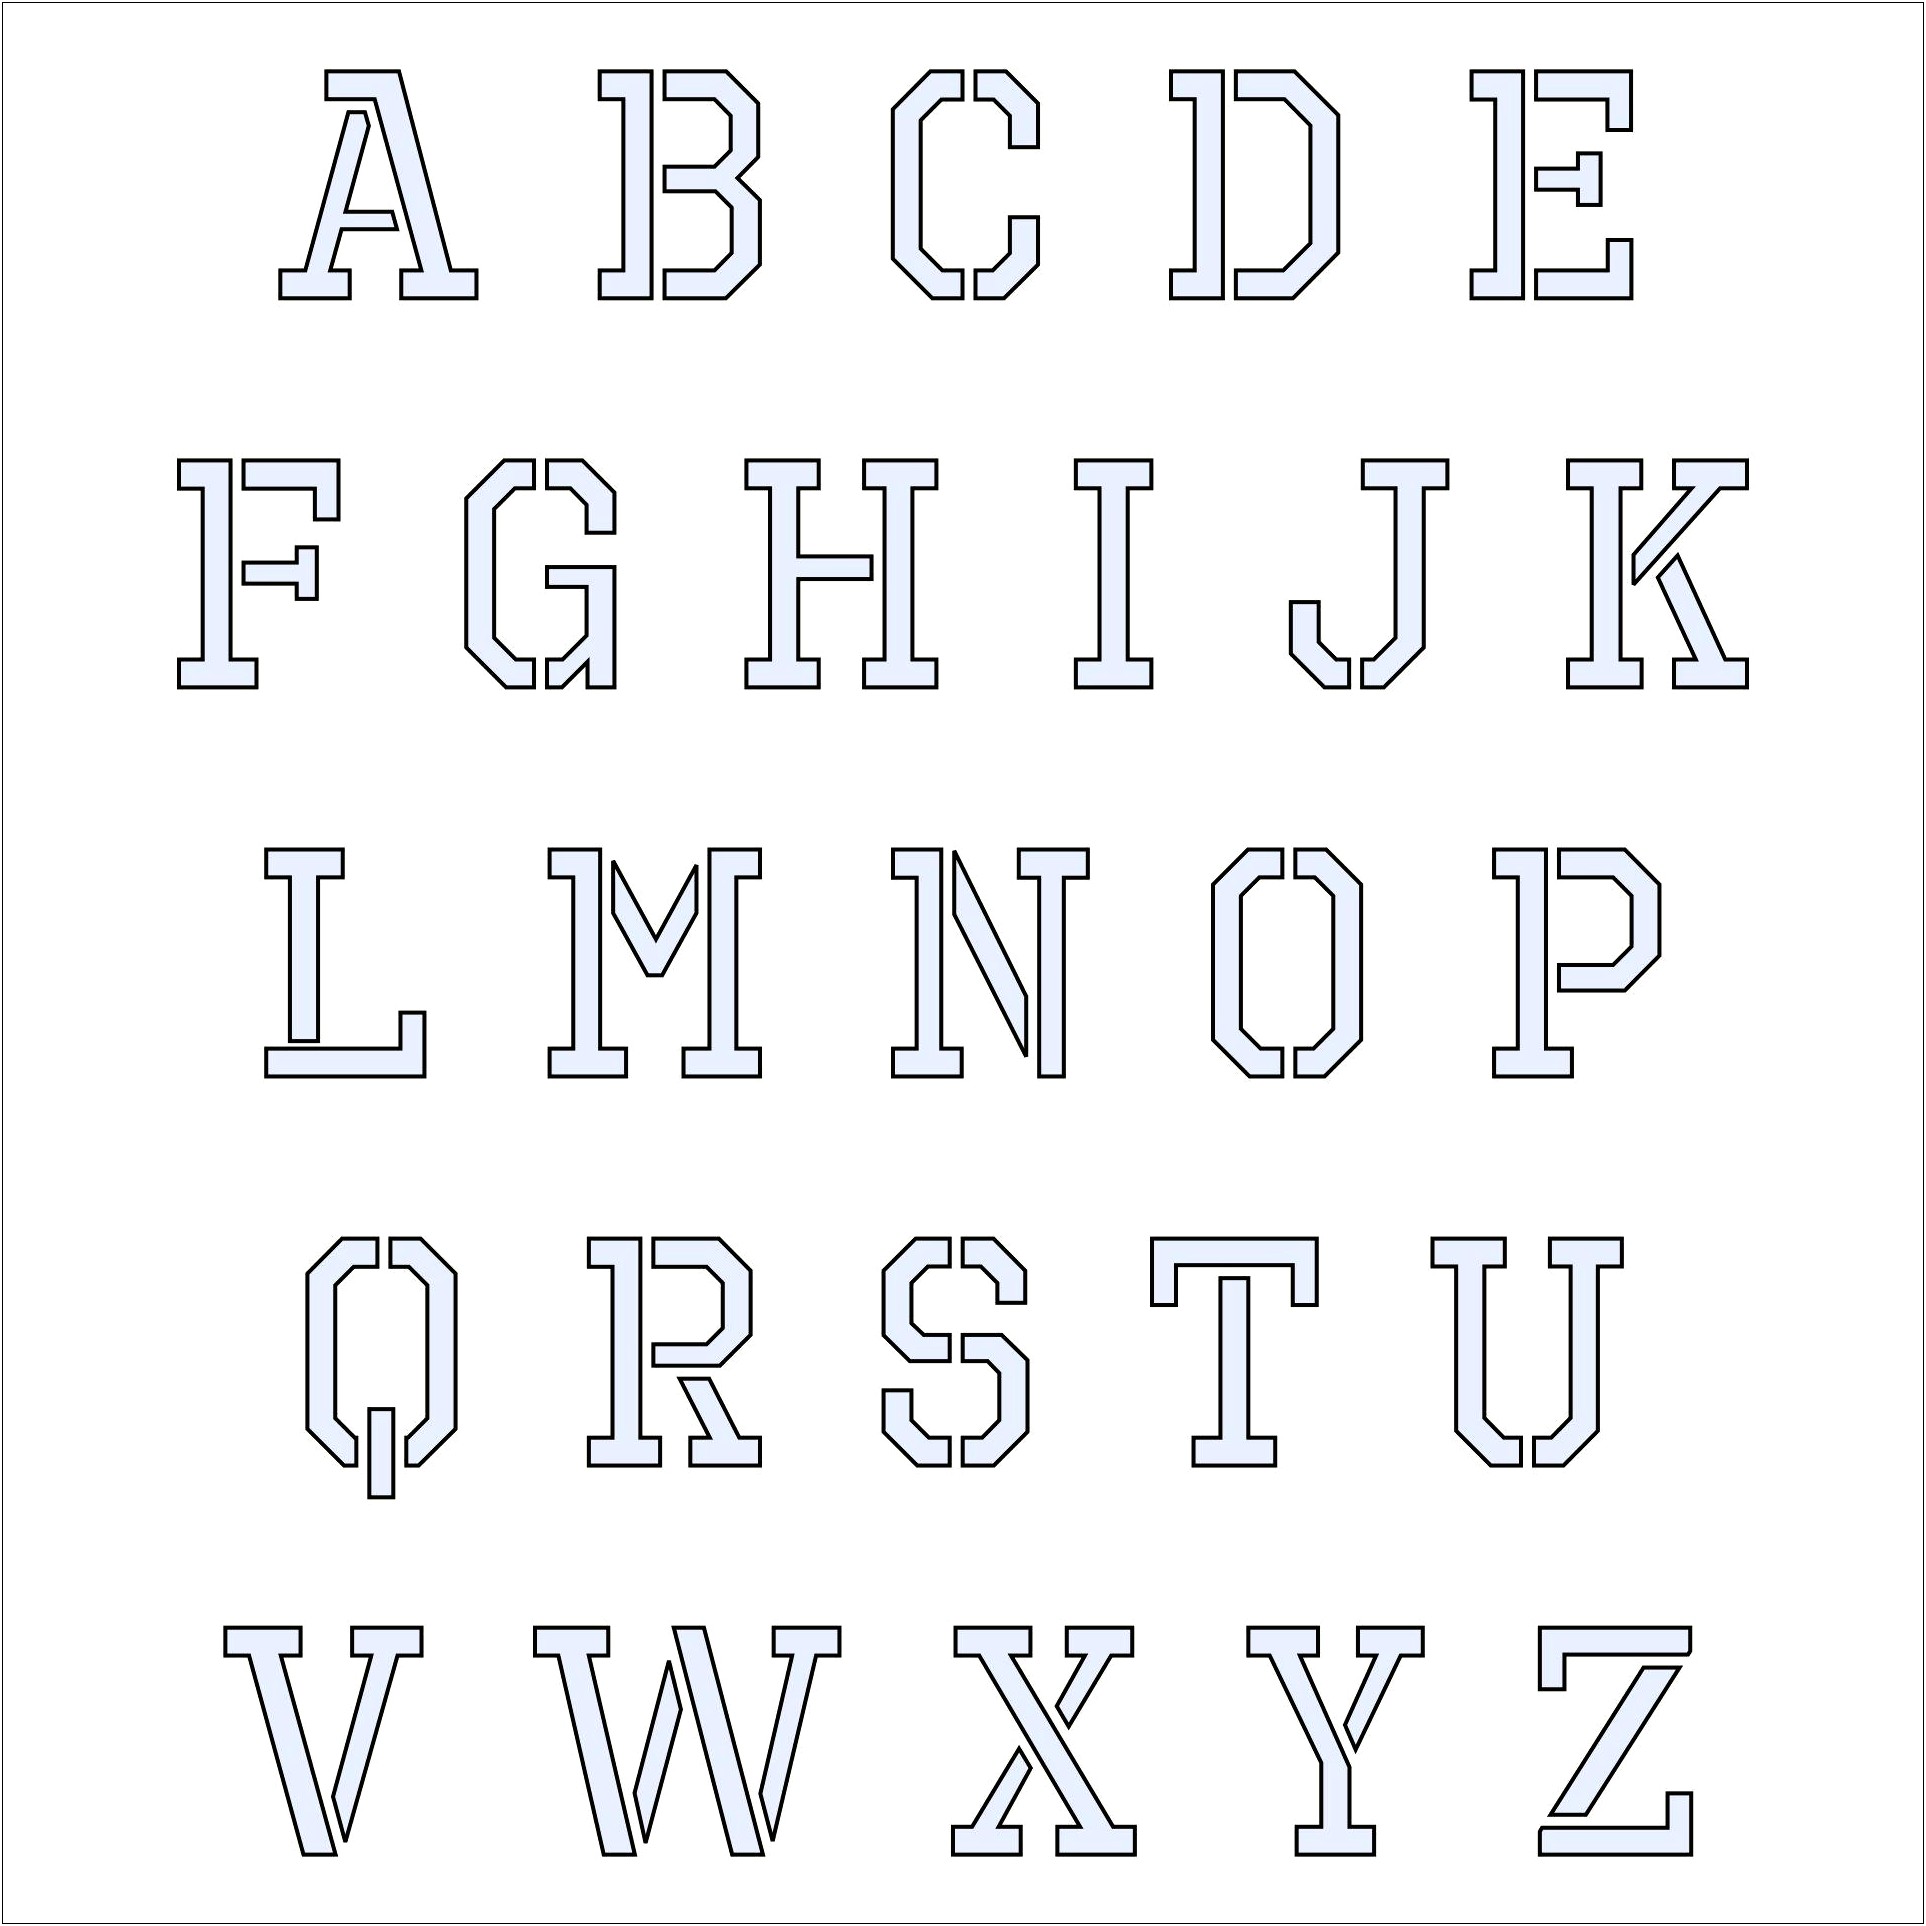 Alphabet Letter Templates For Bulletin Boards